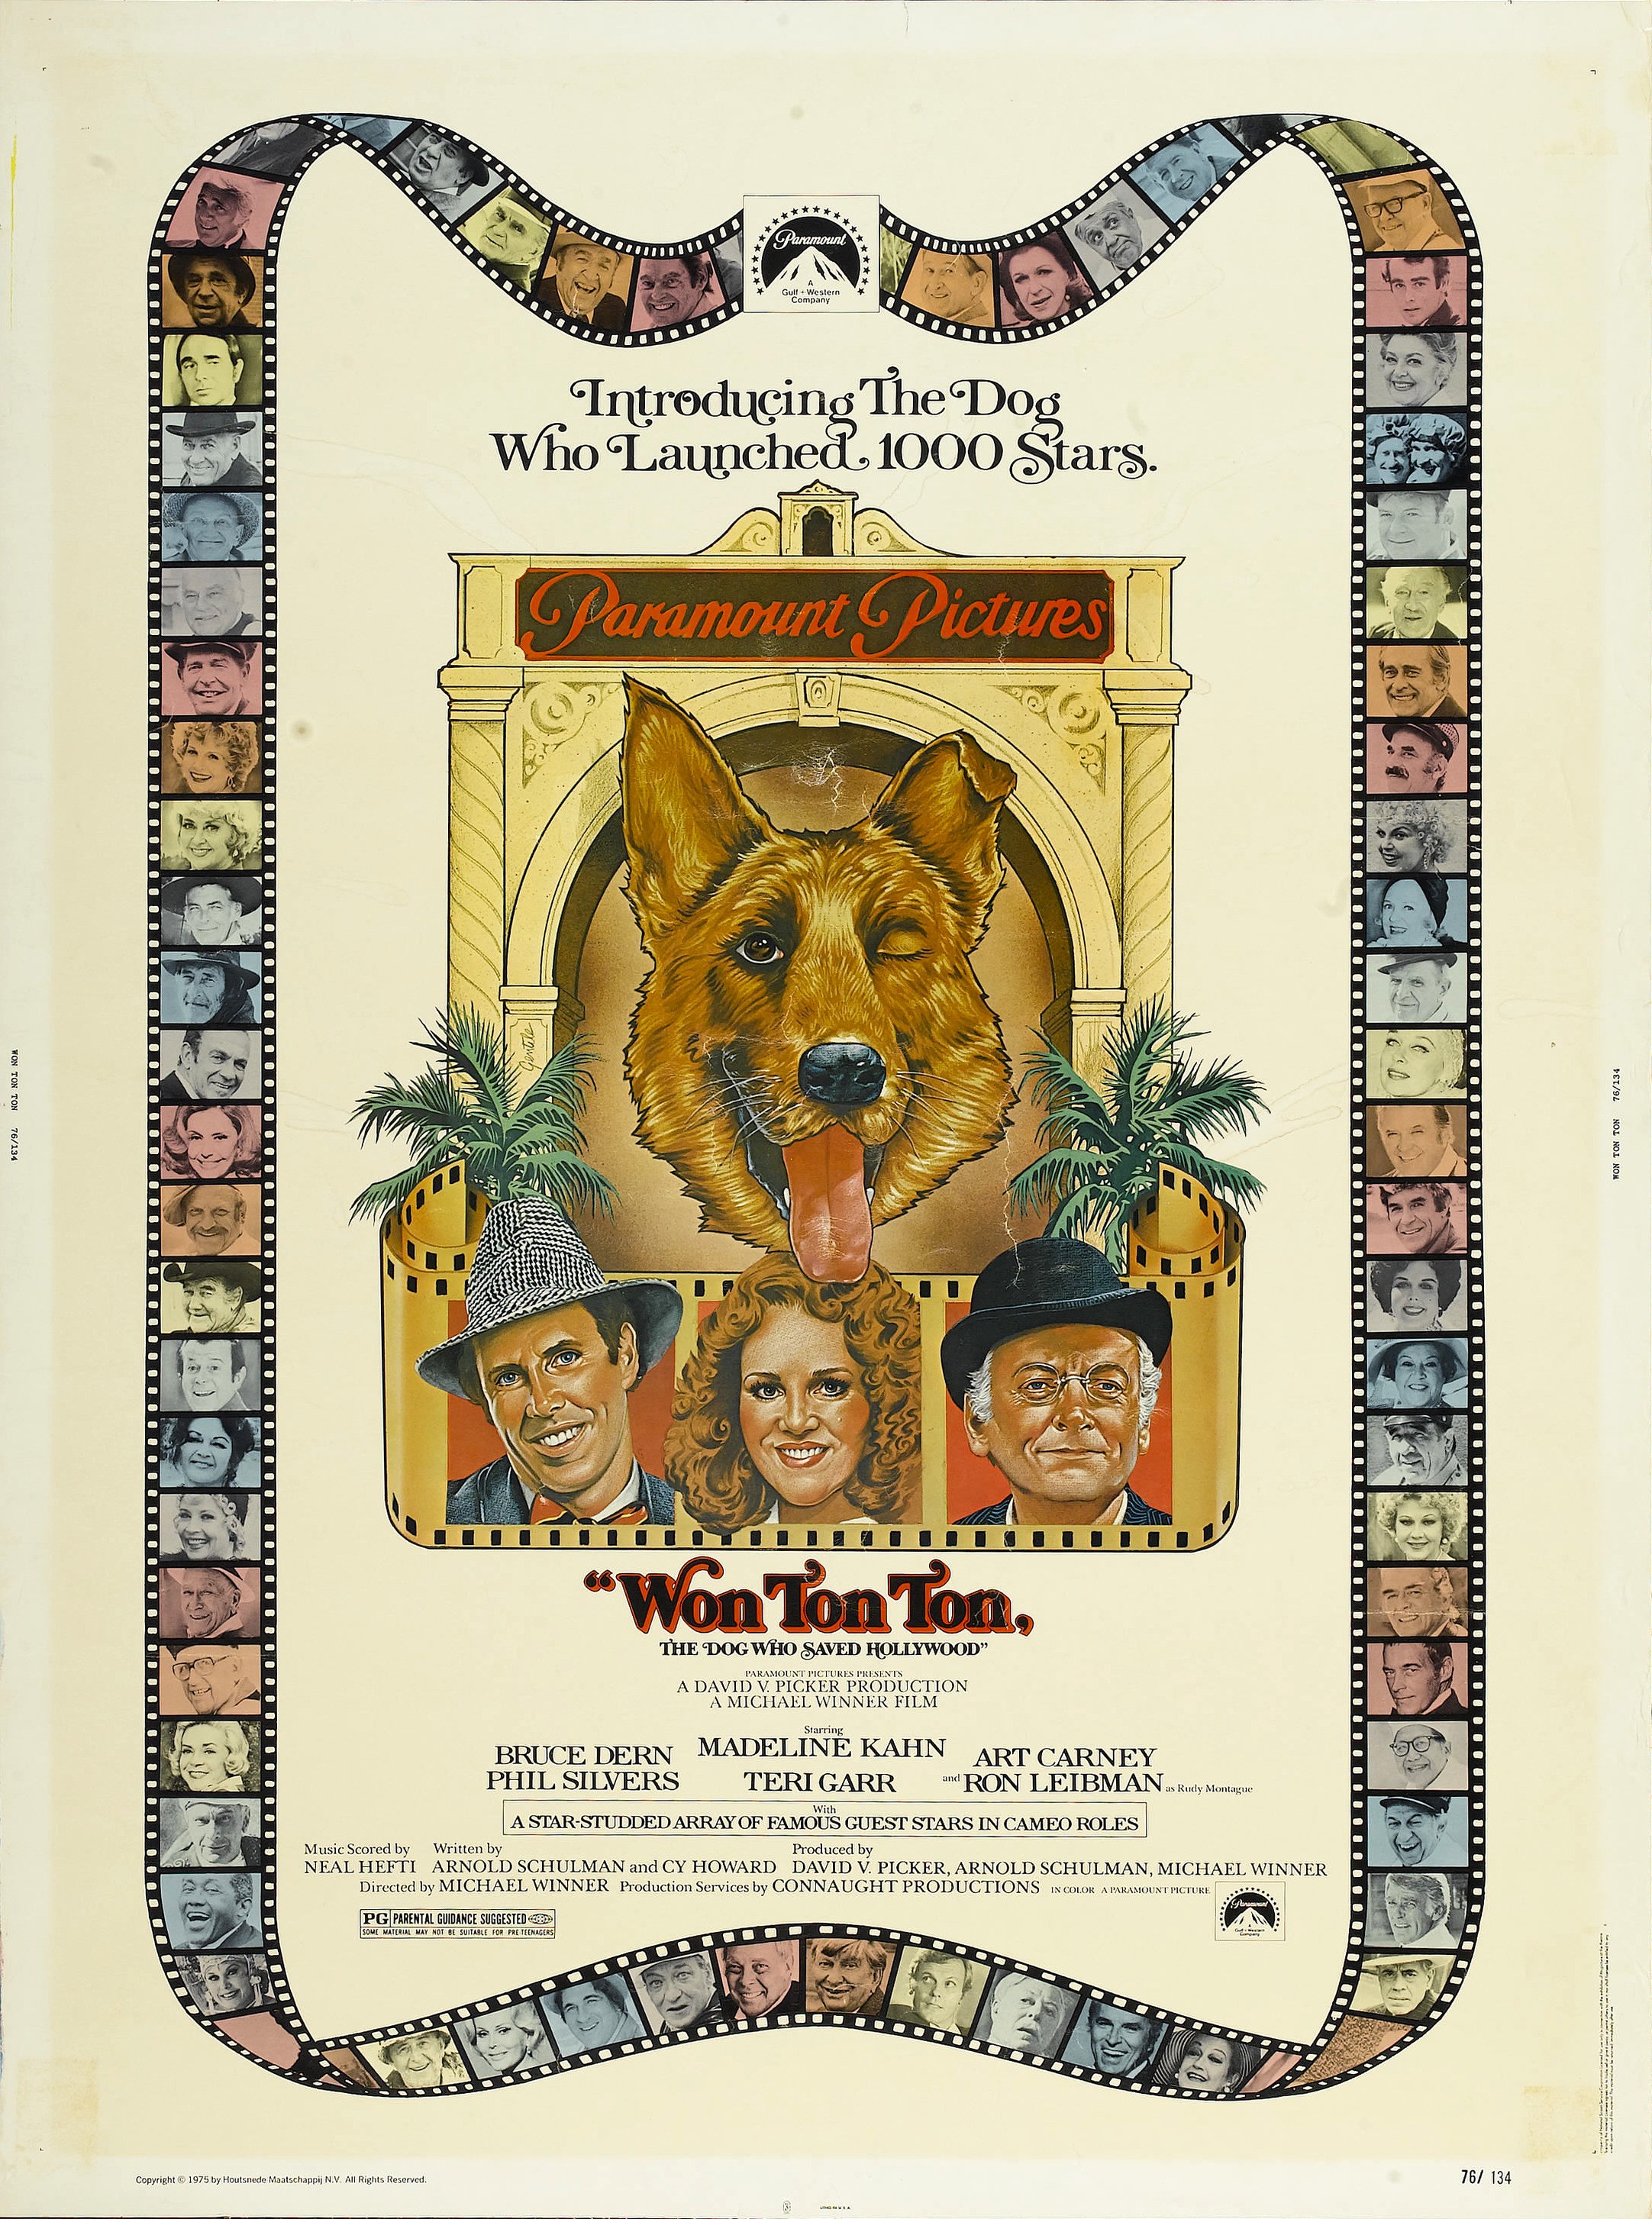 Mega Sized Movie Poster Image for Won Ton Ton: The Dog Who Saved Hollywood 